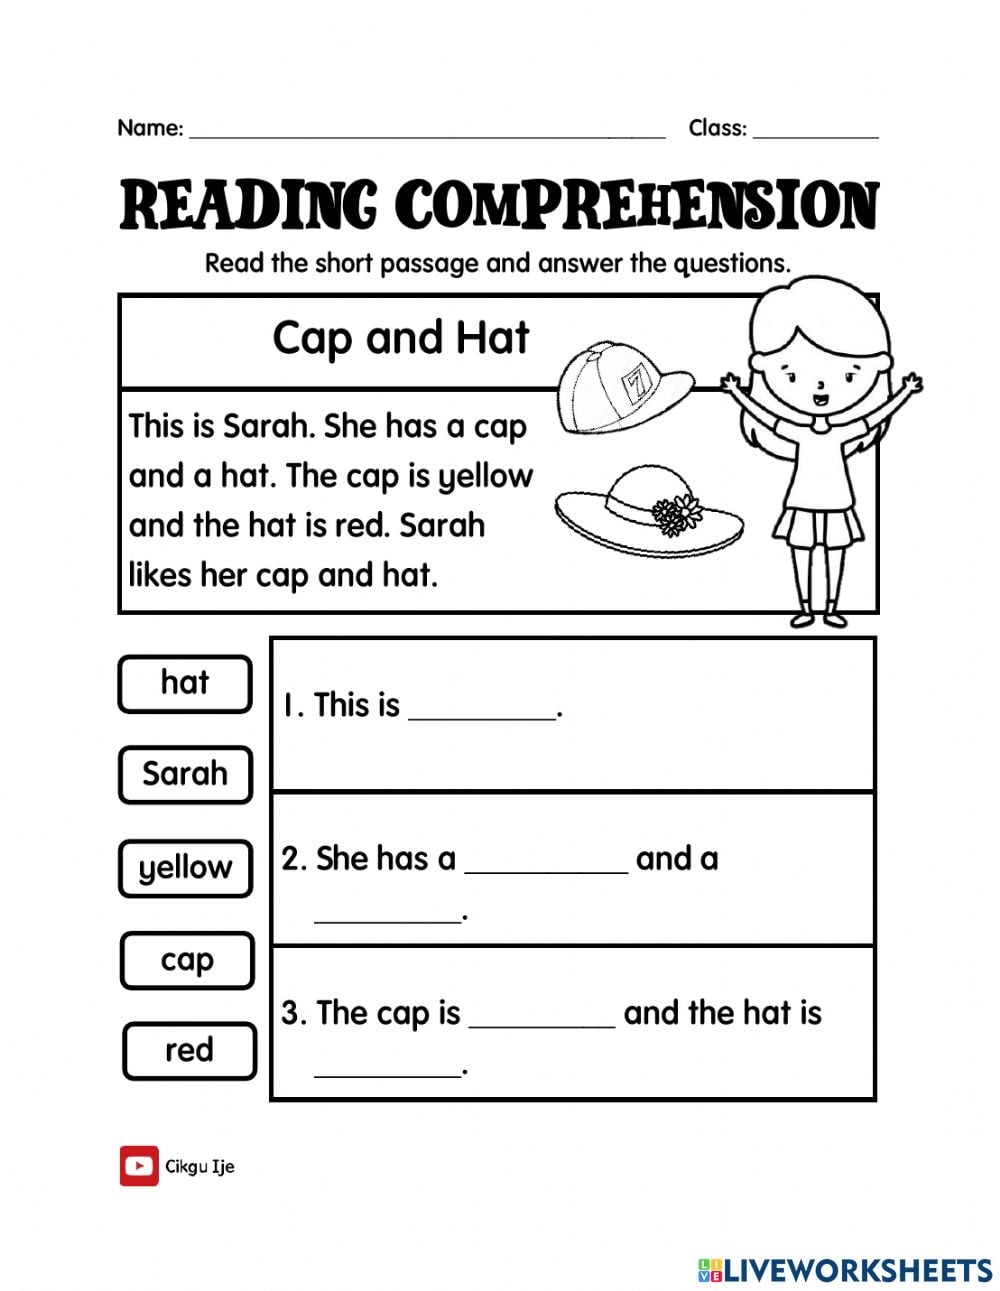 Cap And Hat Reading Comprehension Level 1 Worksheet